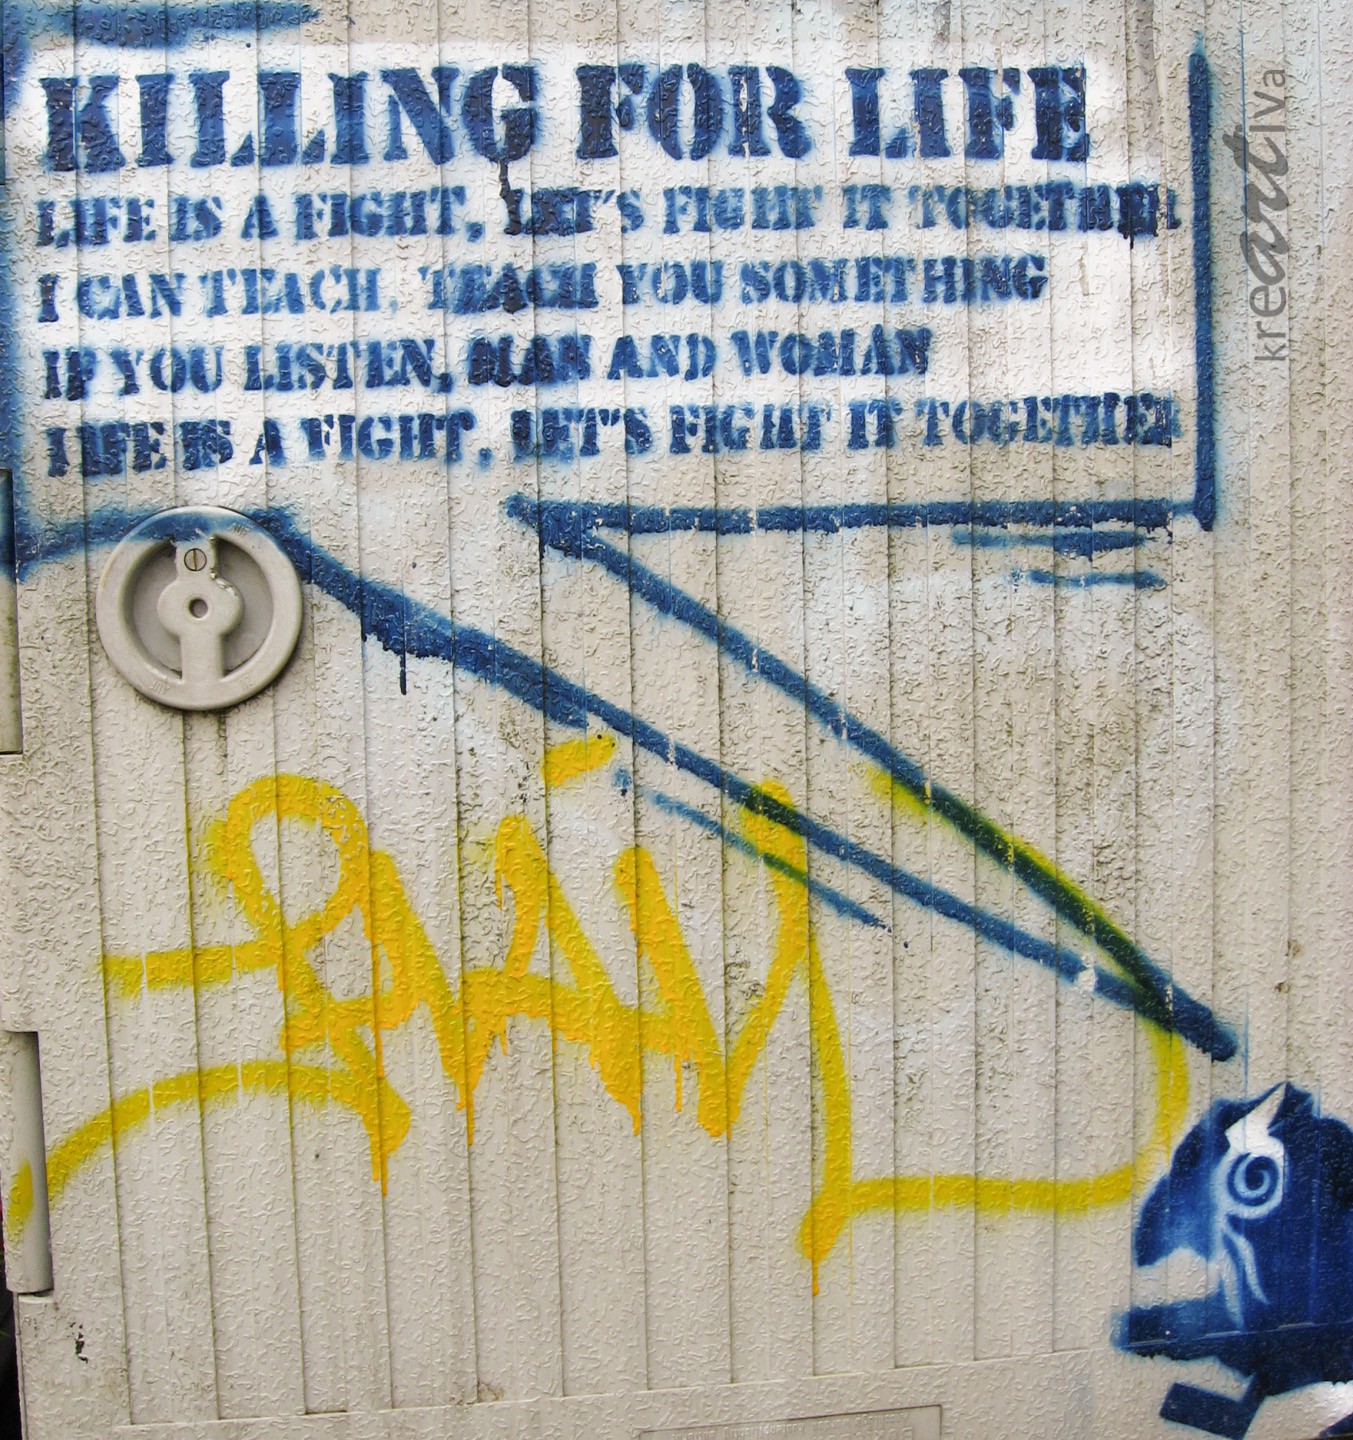 Killing for life, Bremen Deutschland 2009.